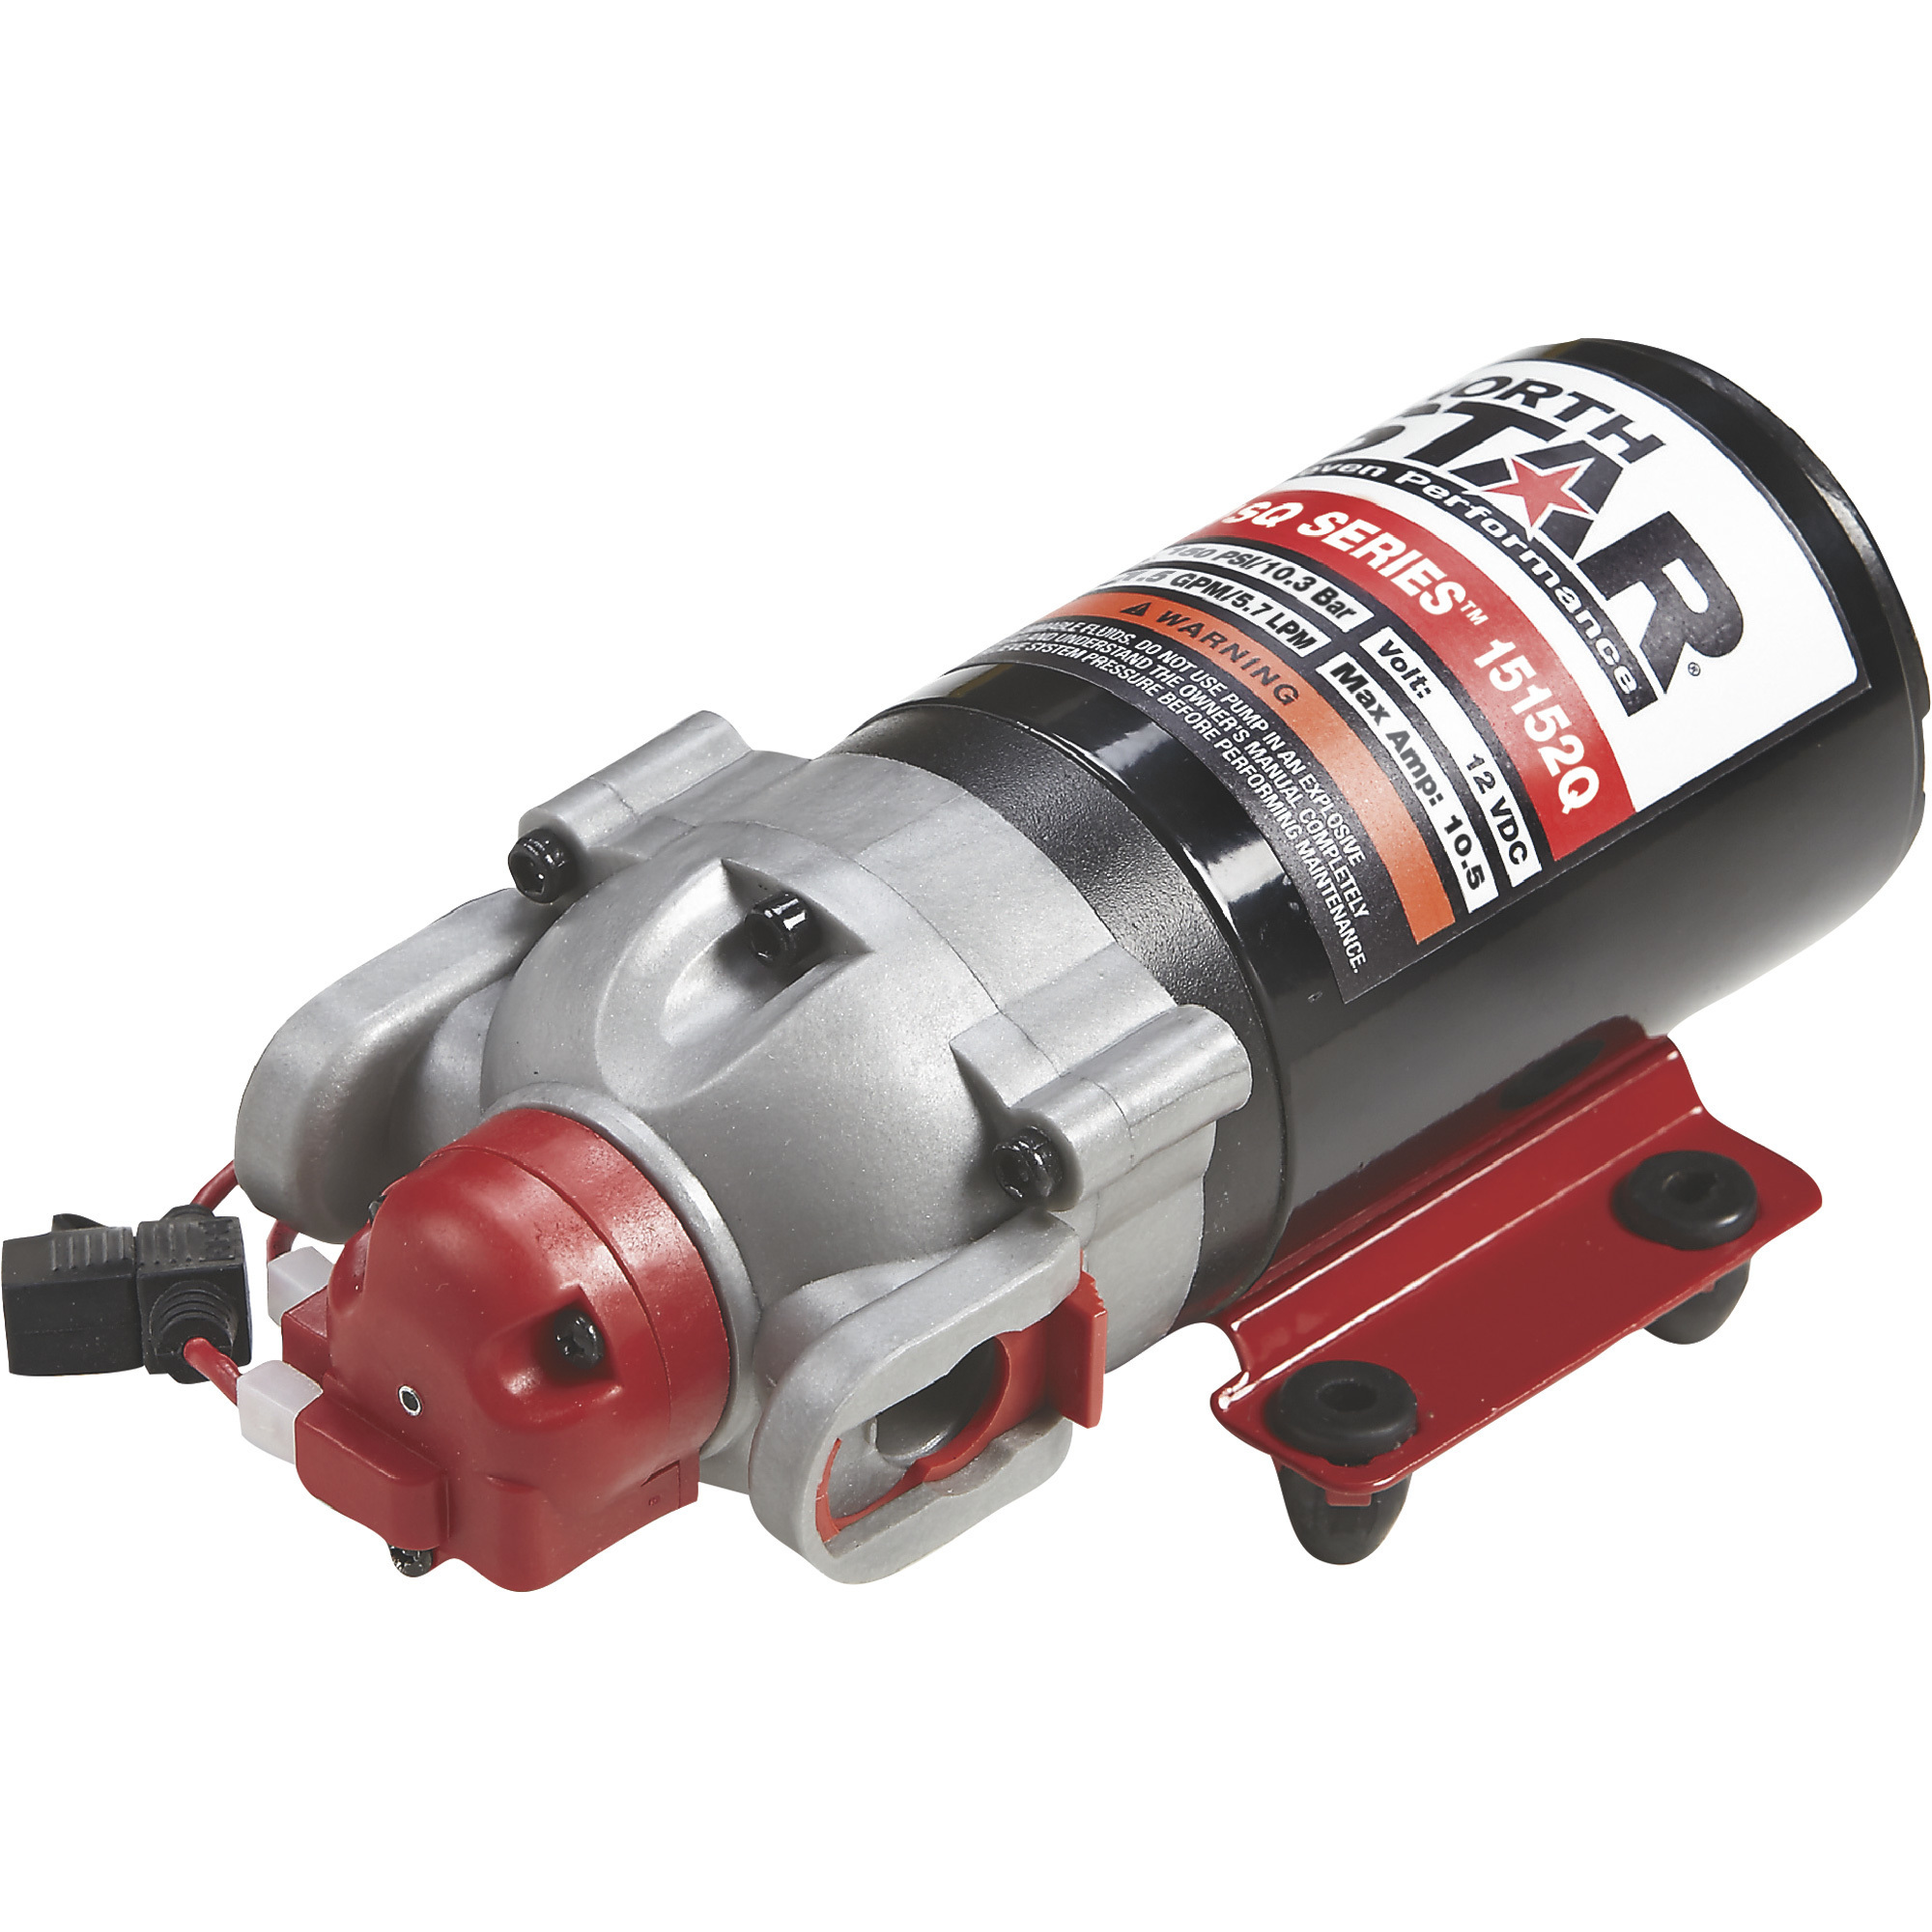 NorthStar 12 Volt High Pressure Sprayer Diaphragm Pump â 1.5 GPM, 150 PSI, Quick-Connect Ports